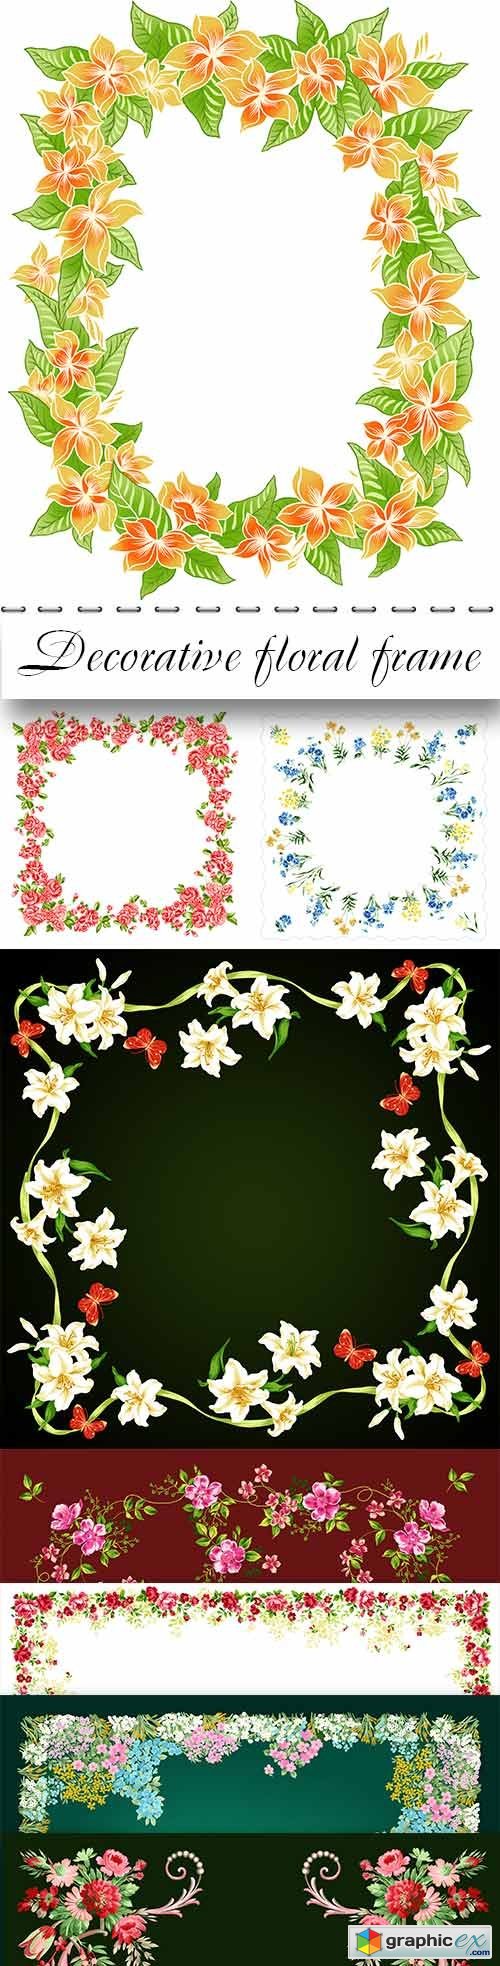 Decorative floral frame PSD